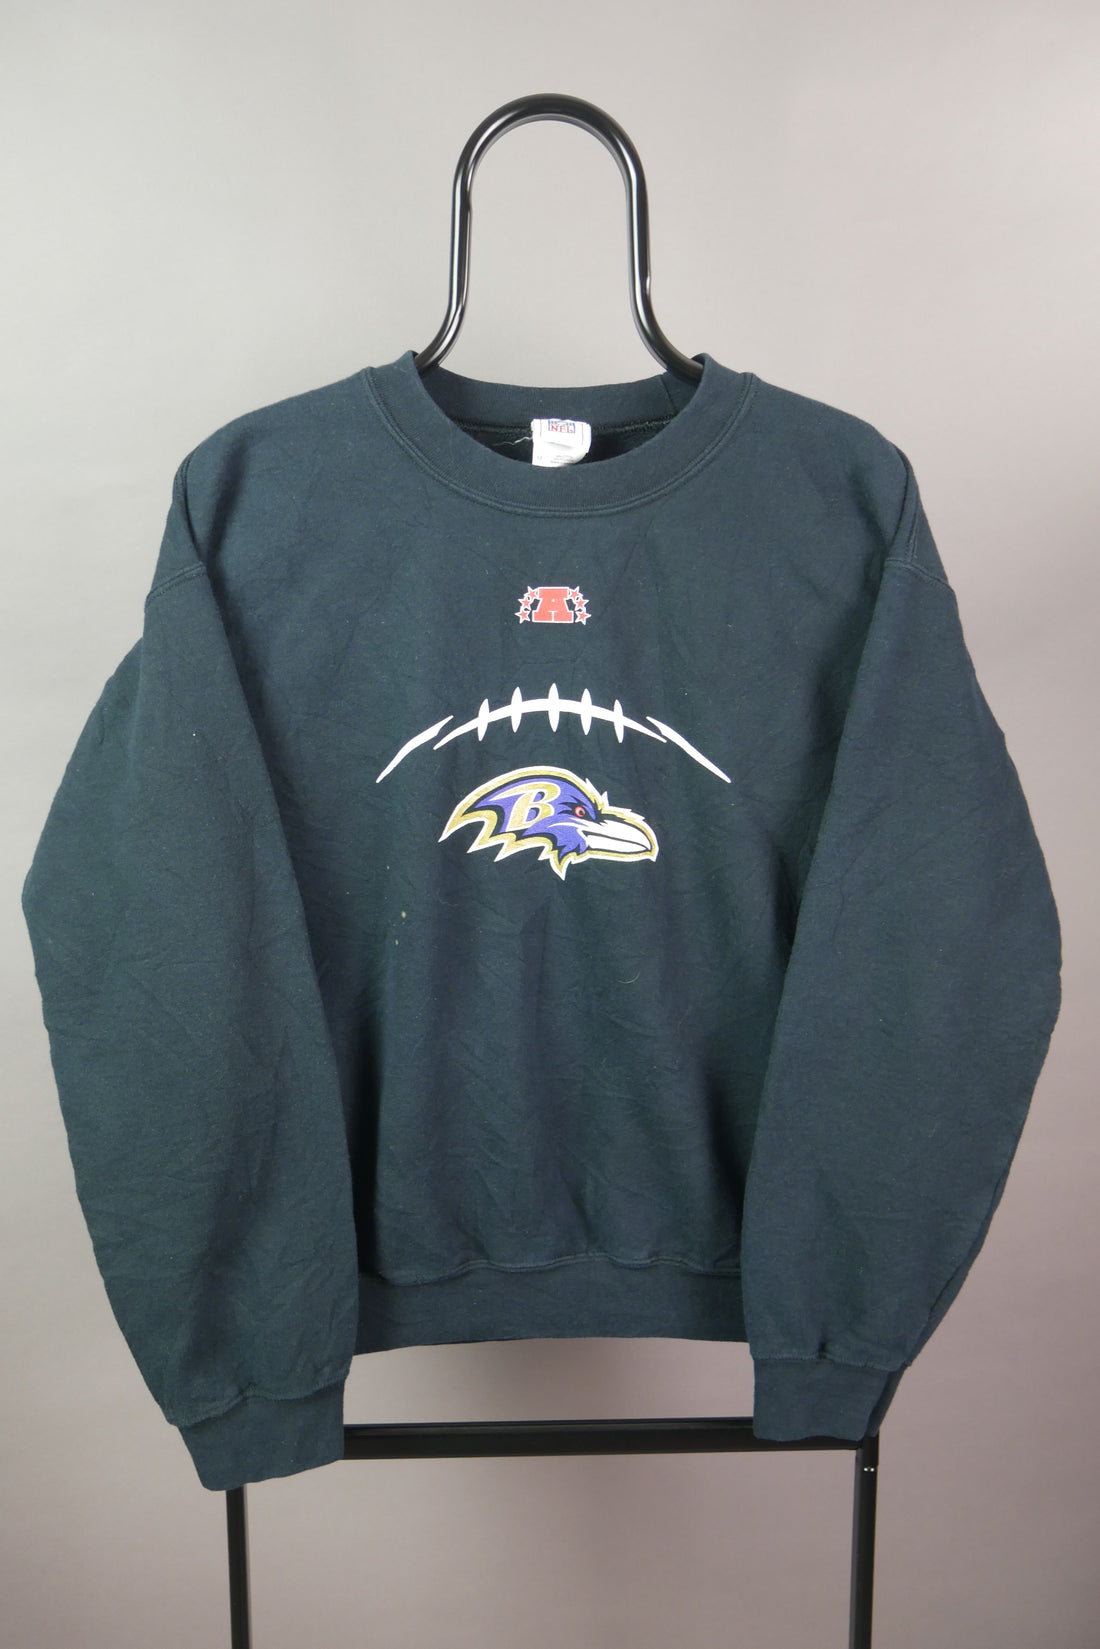 The NFL Graphic Sweatshirt (M)